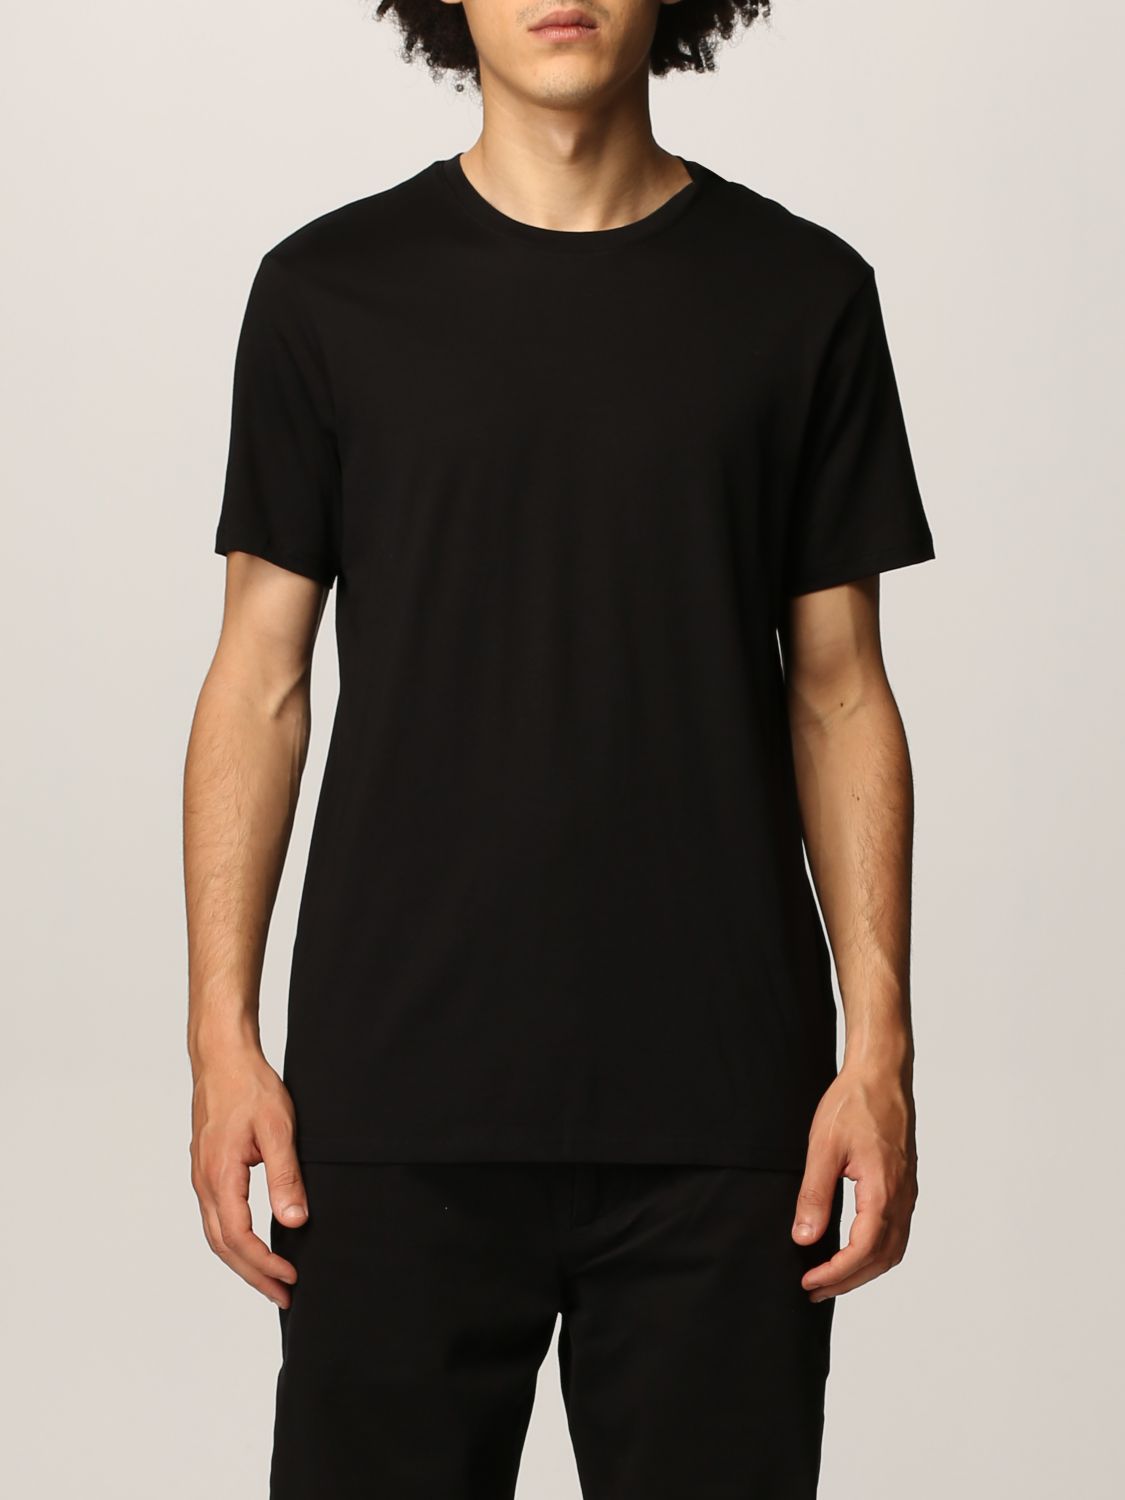 ARMANI EXCHANGE: T-shirt in cotton jersey - Black | Armani Exchange t ...